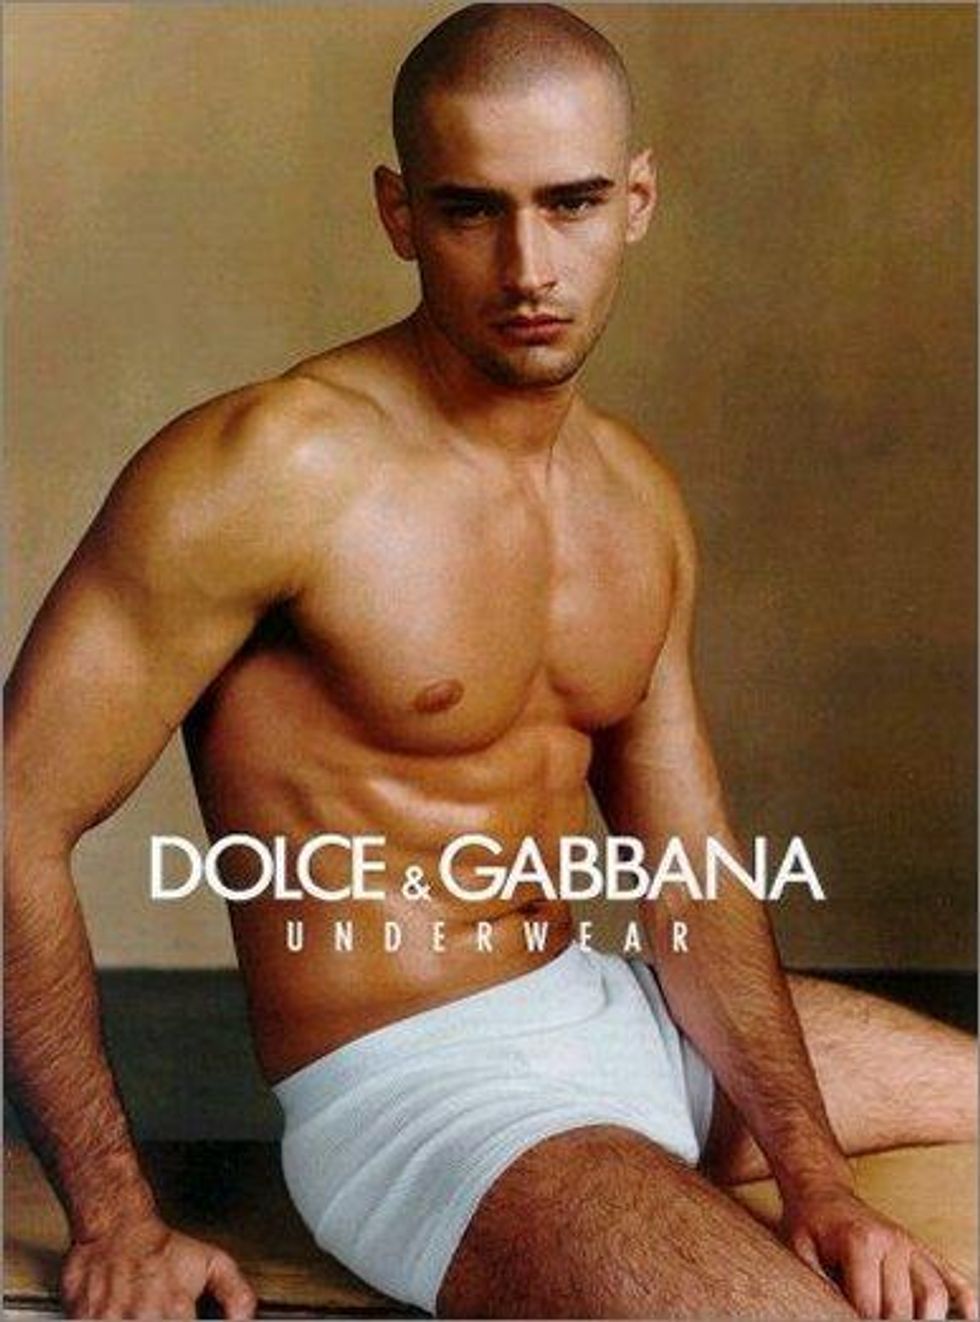 Christian Monzon for Dolce & Gabbana, 2001